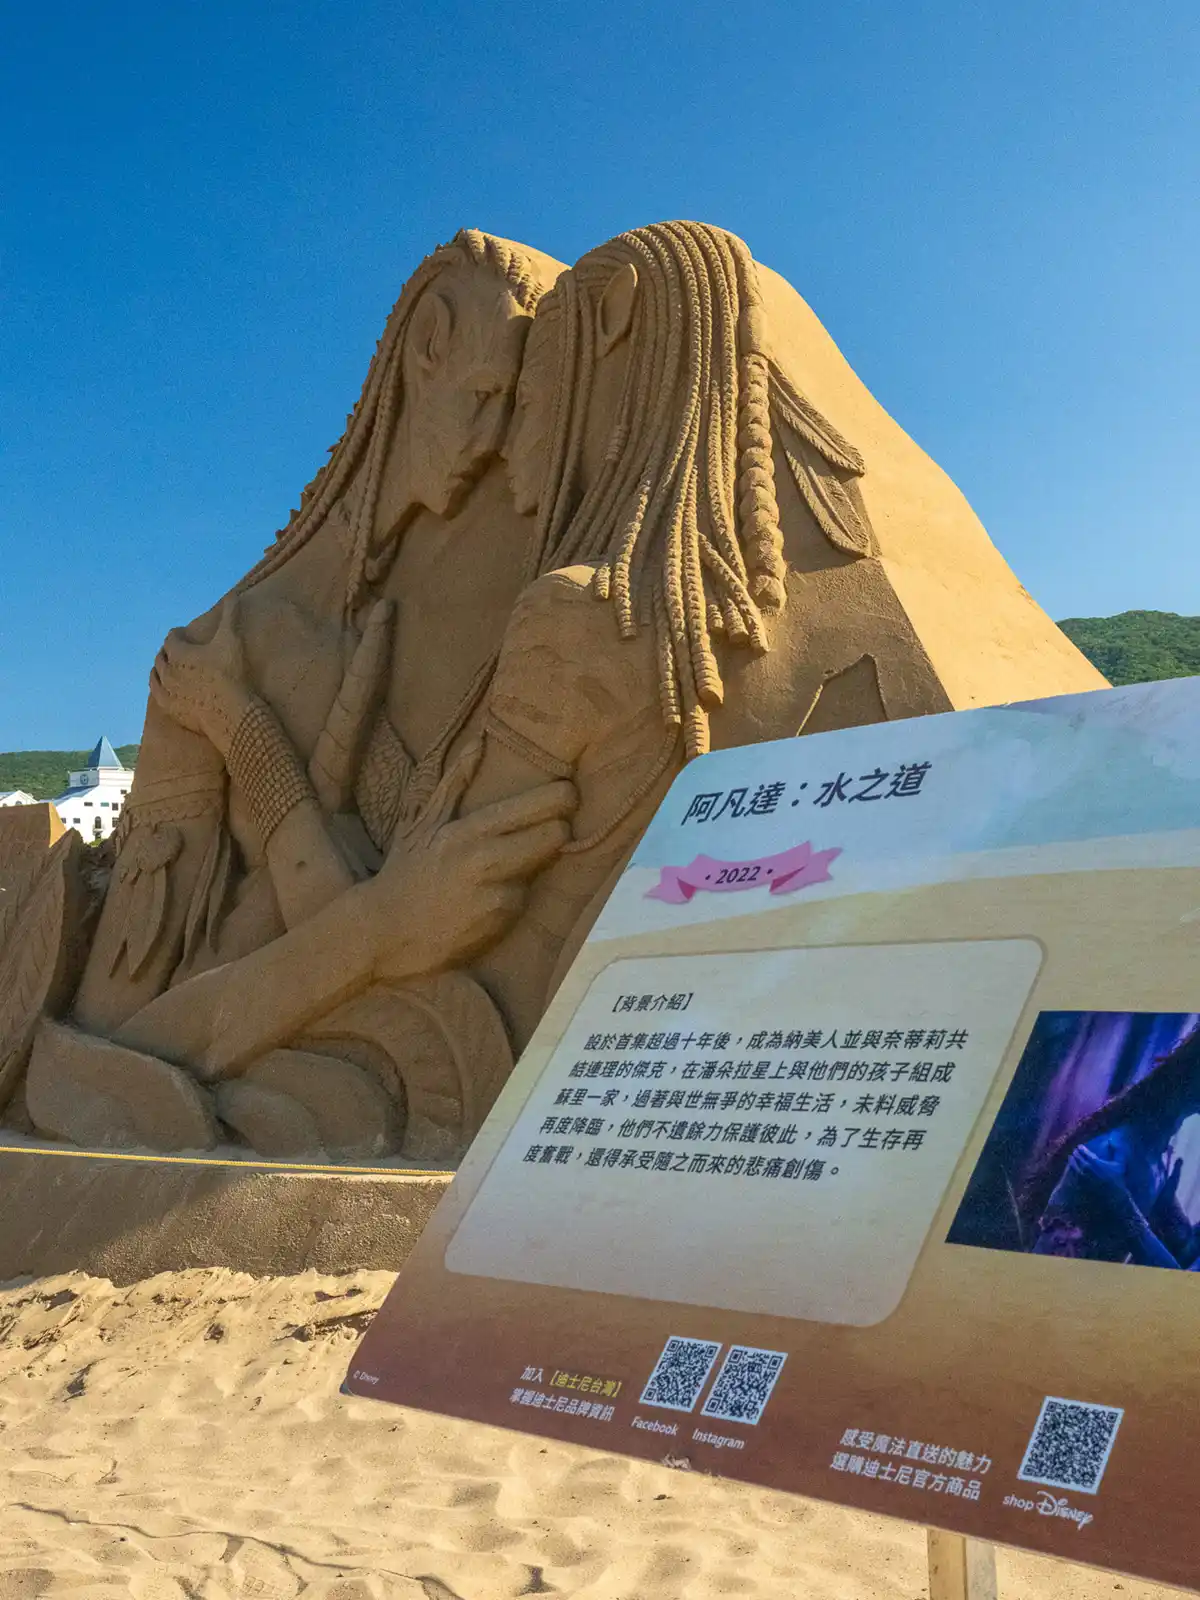 Art Sand Sculpture - Avatar theme